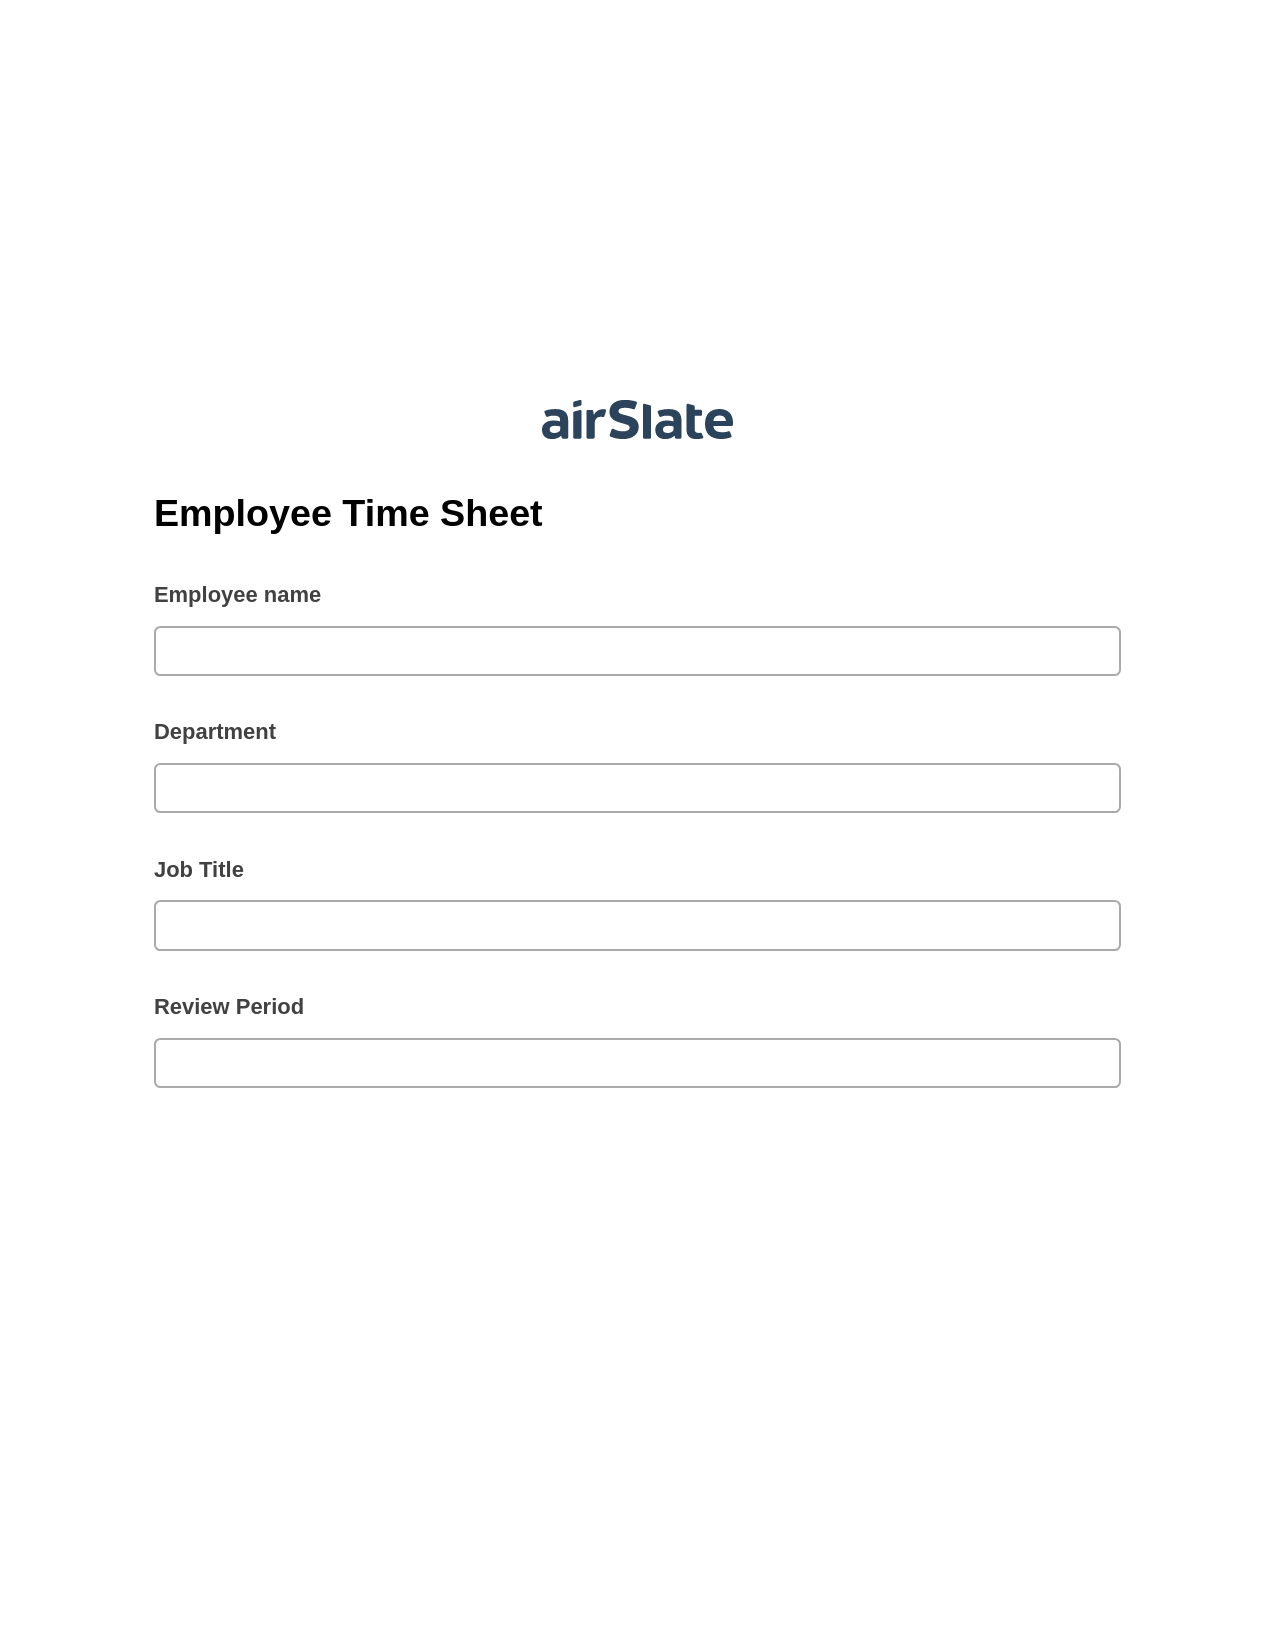 Multirole Employee Time Sheet Pre-fill from MS Dynamics 365 Records, Update Audit Trail Bot, Slack Notification Postfinish Bot